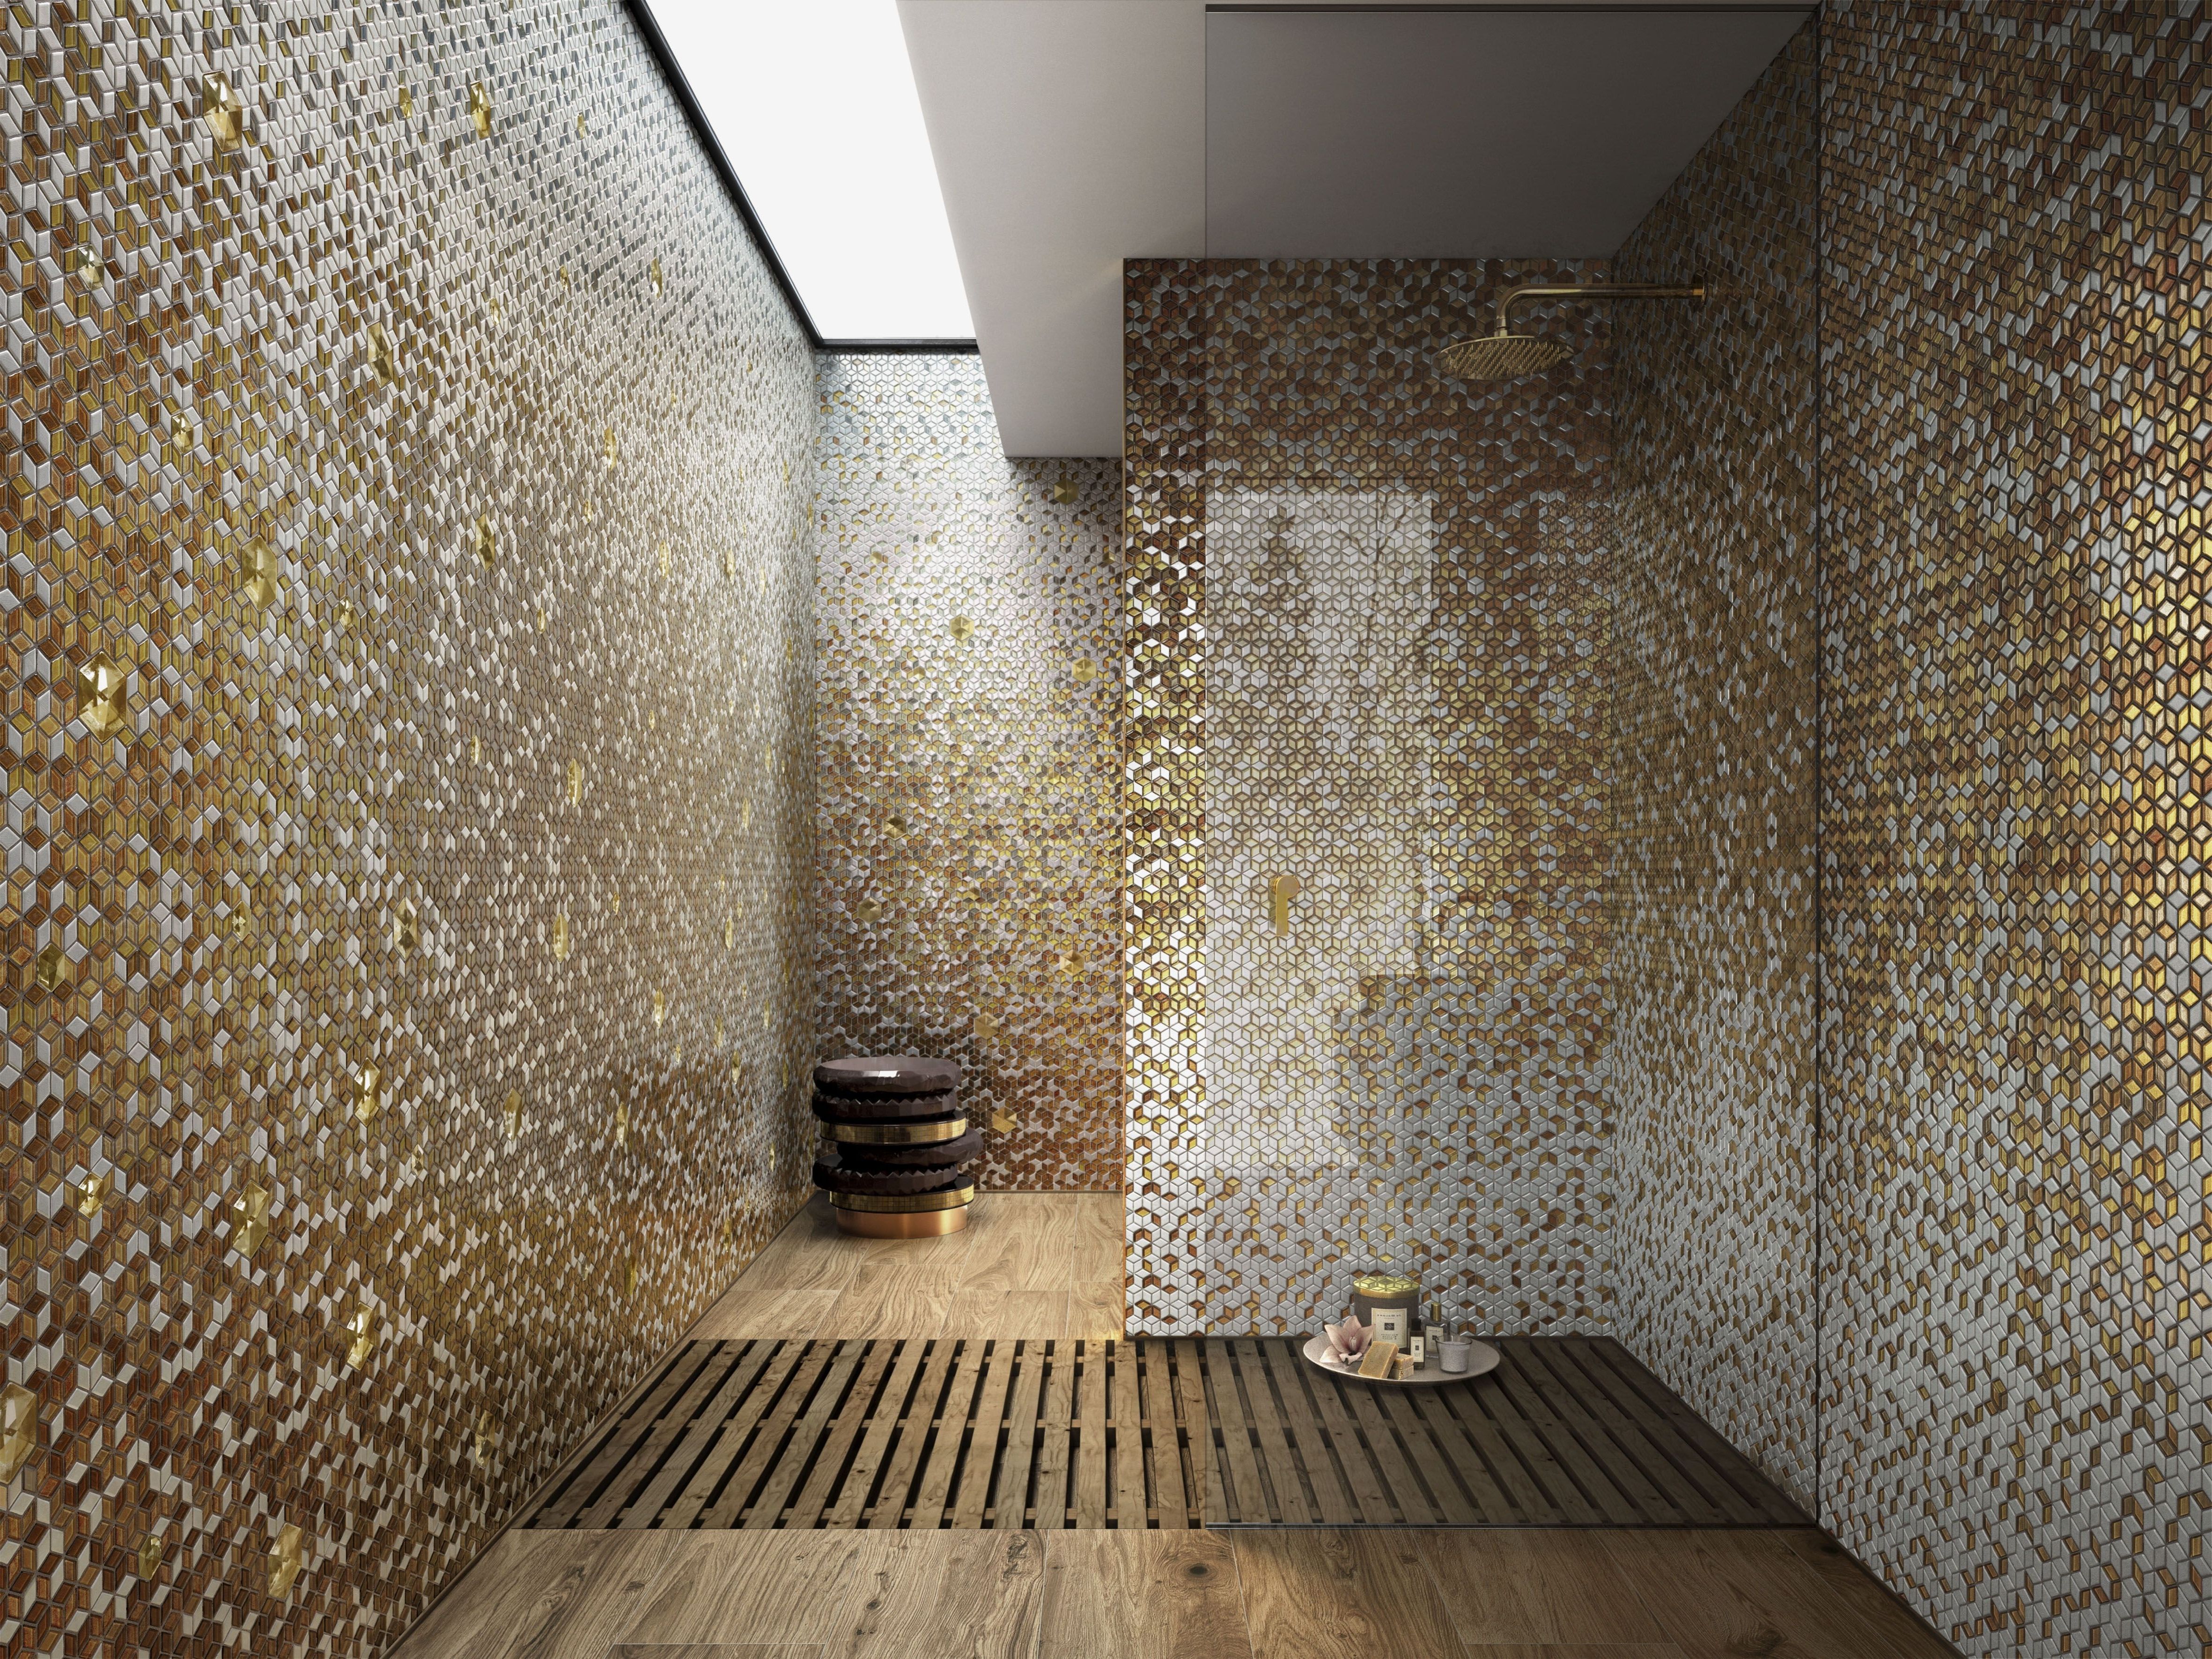 Bathroom Decor With Sicis Jog Degradé Pattern From Diamond Regarding Most Current Italian Mosaic Wall Art (View 15 of 15)